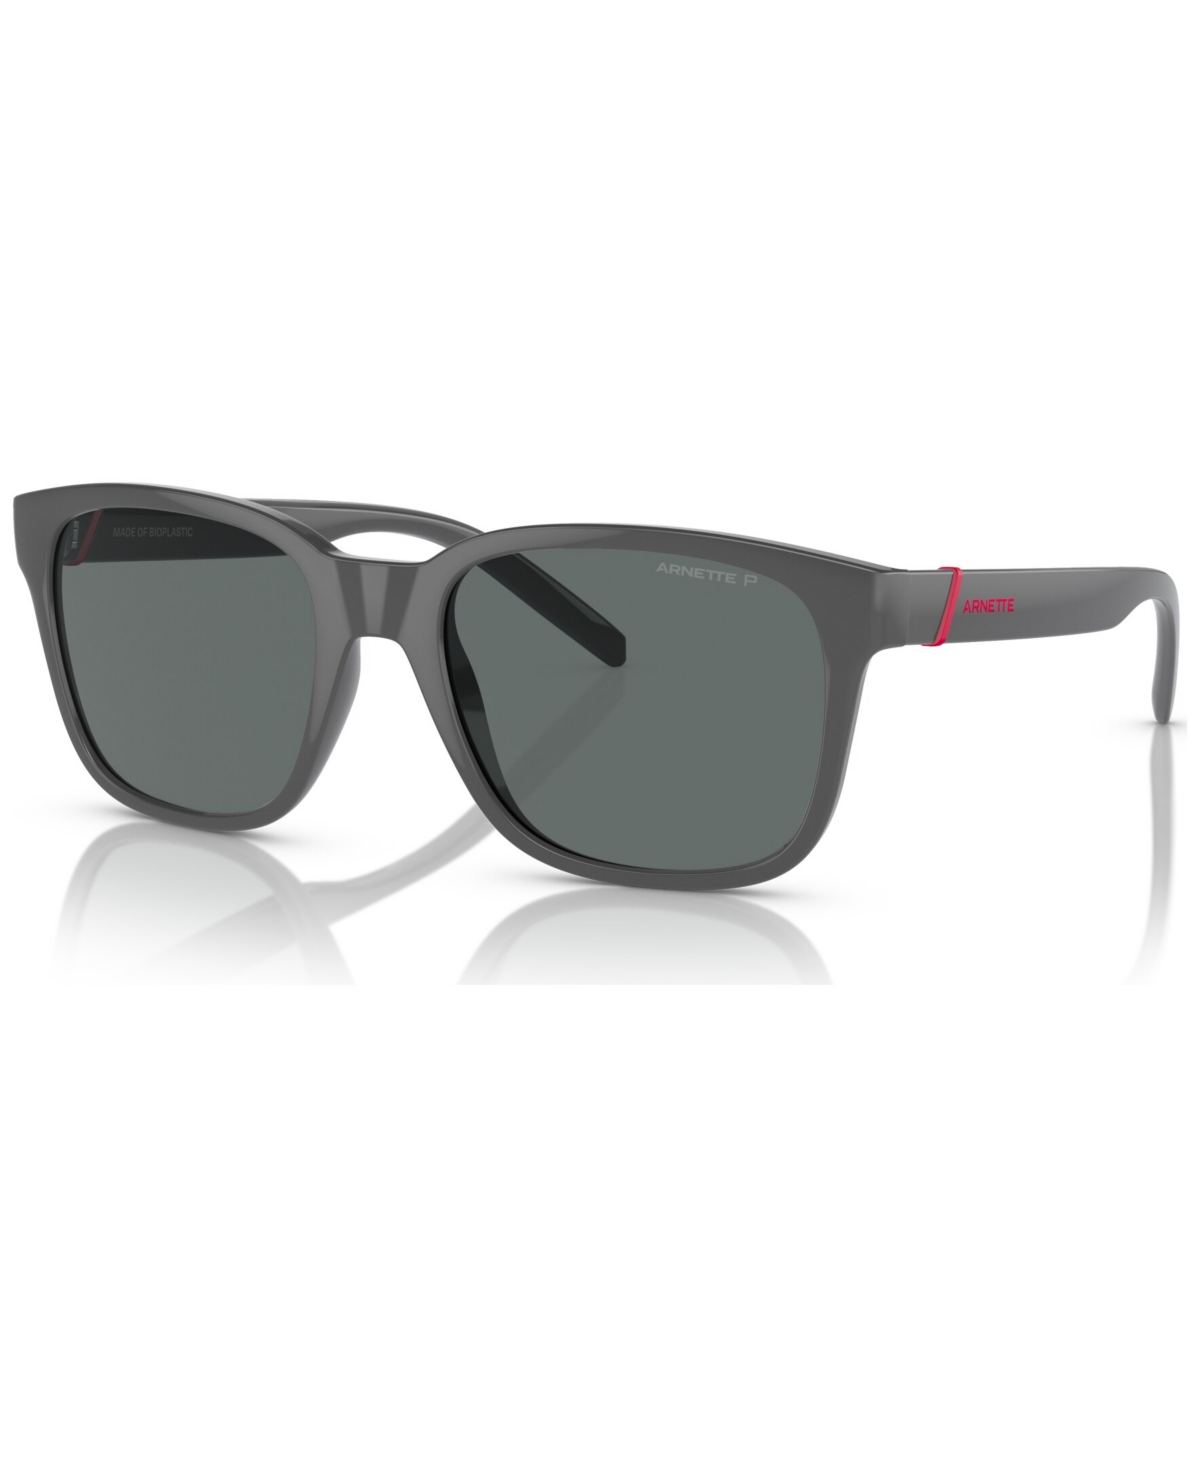 Men's Polarized Sunglasses, Surry H - Gray